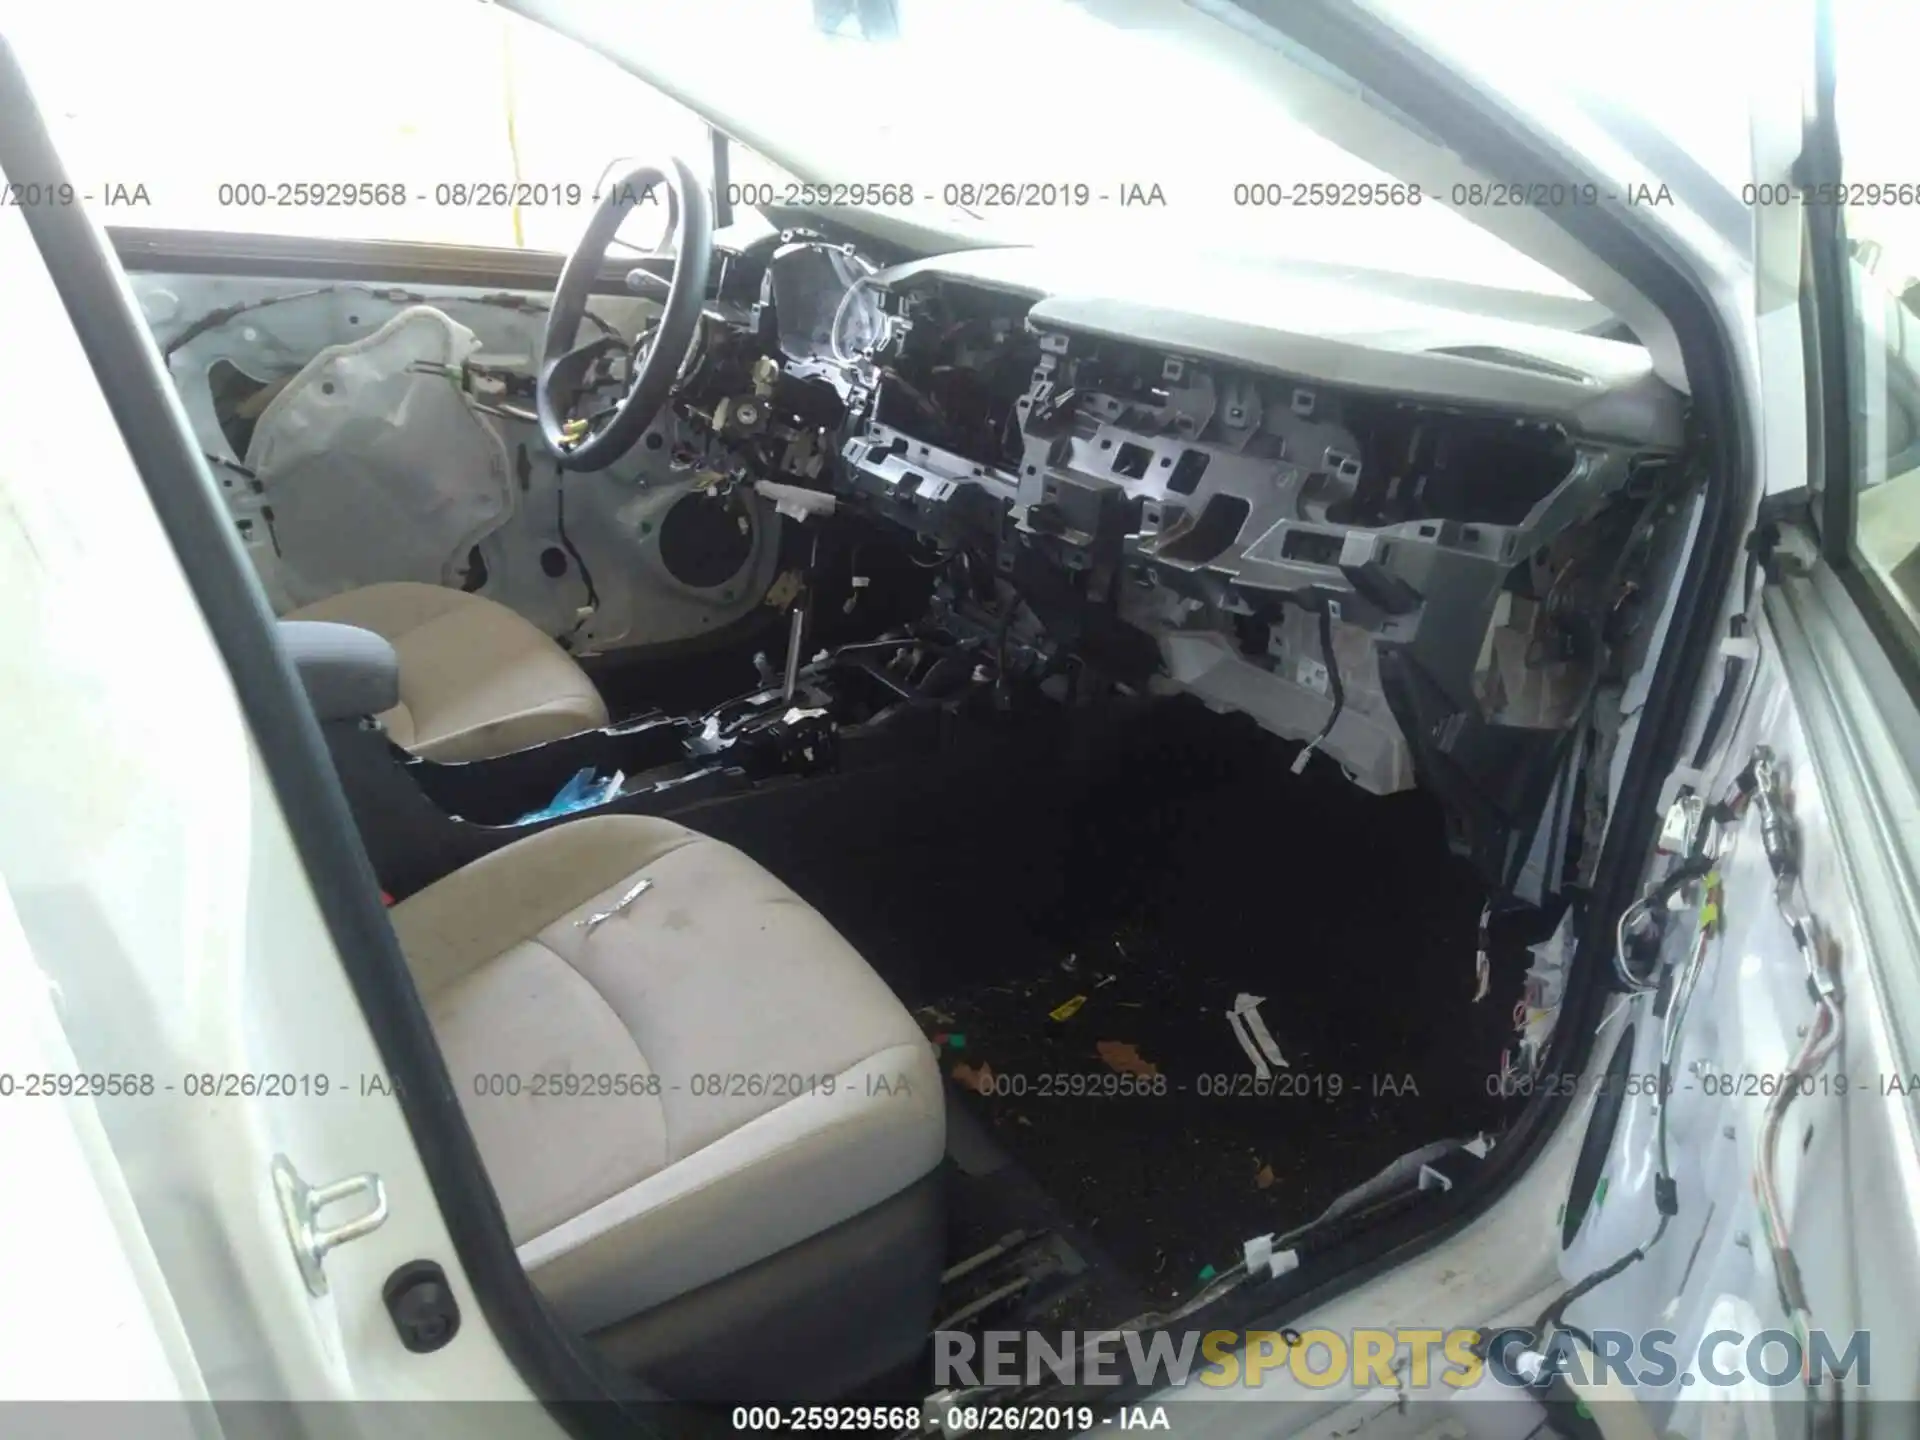 5 Photograph of a damaged car JTDEPRAE3LJ025442 TOYOTA COROLLA 2020